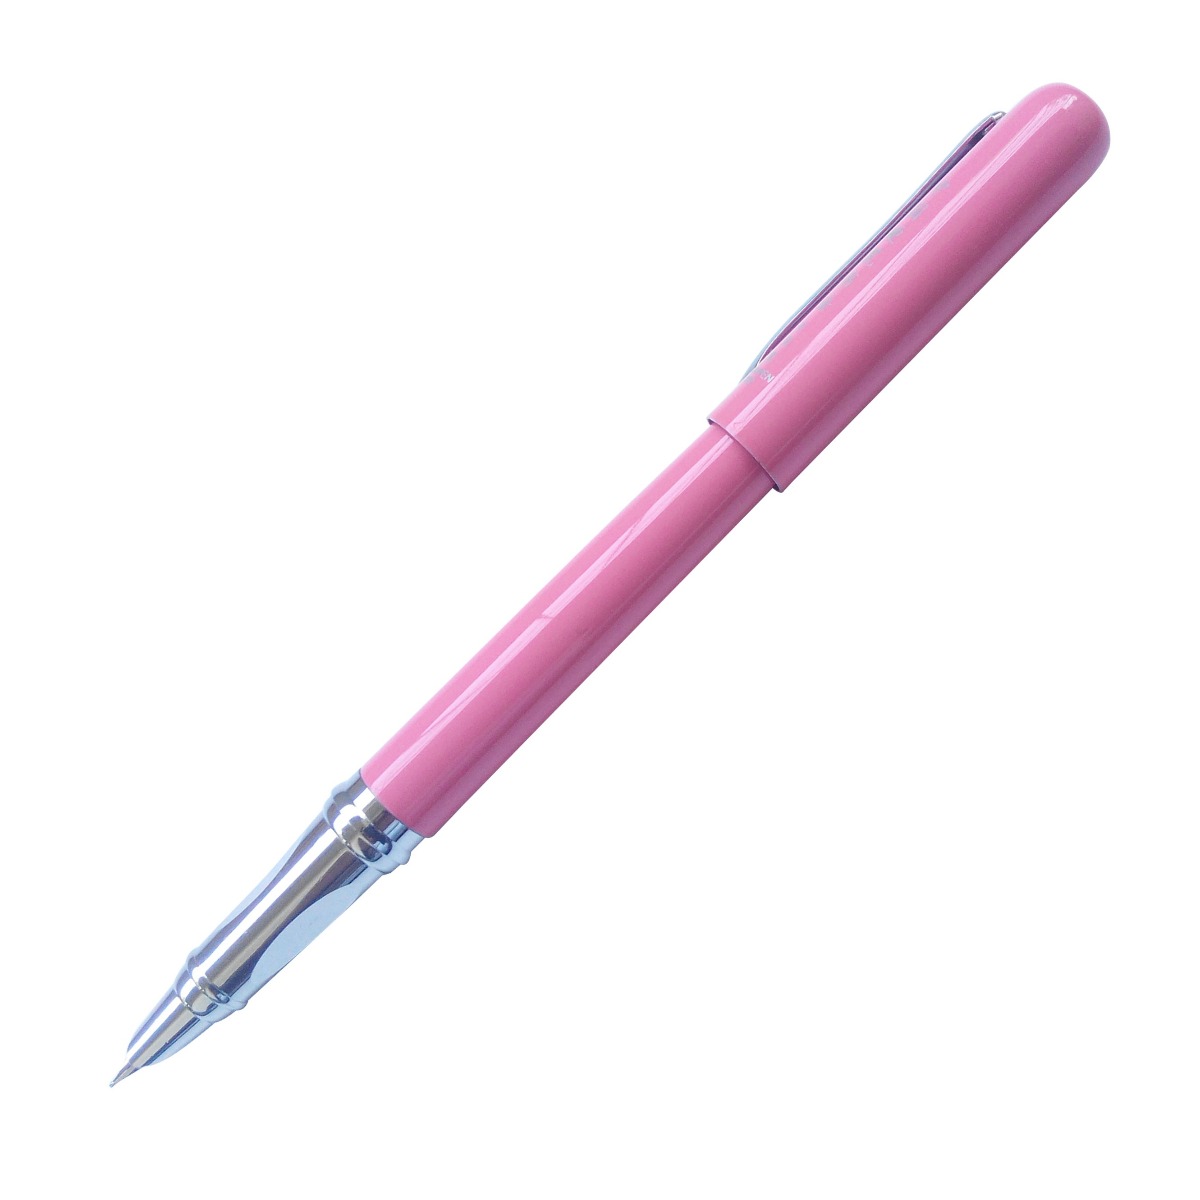 Dikawen Model ; 10966 Pink Color Body with Silver Clip Fine Nib  Fountain Pen